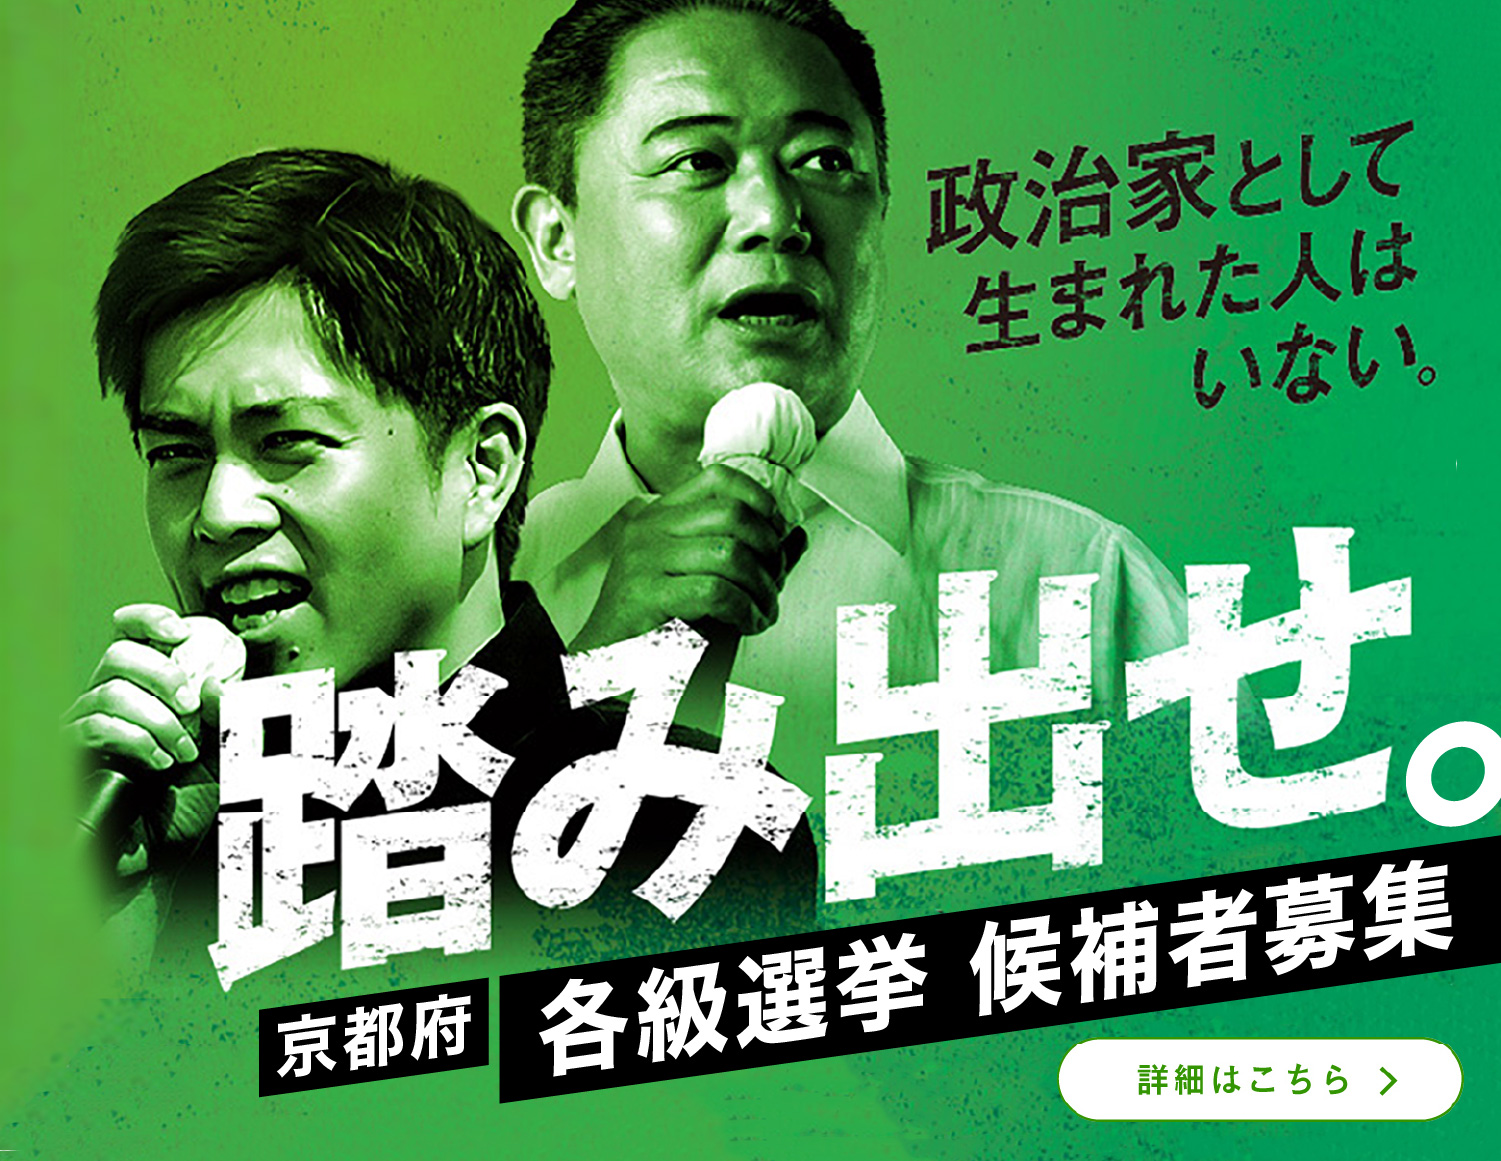 京都府各級選挙候補者募集ヘッダー画像